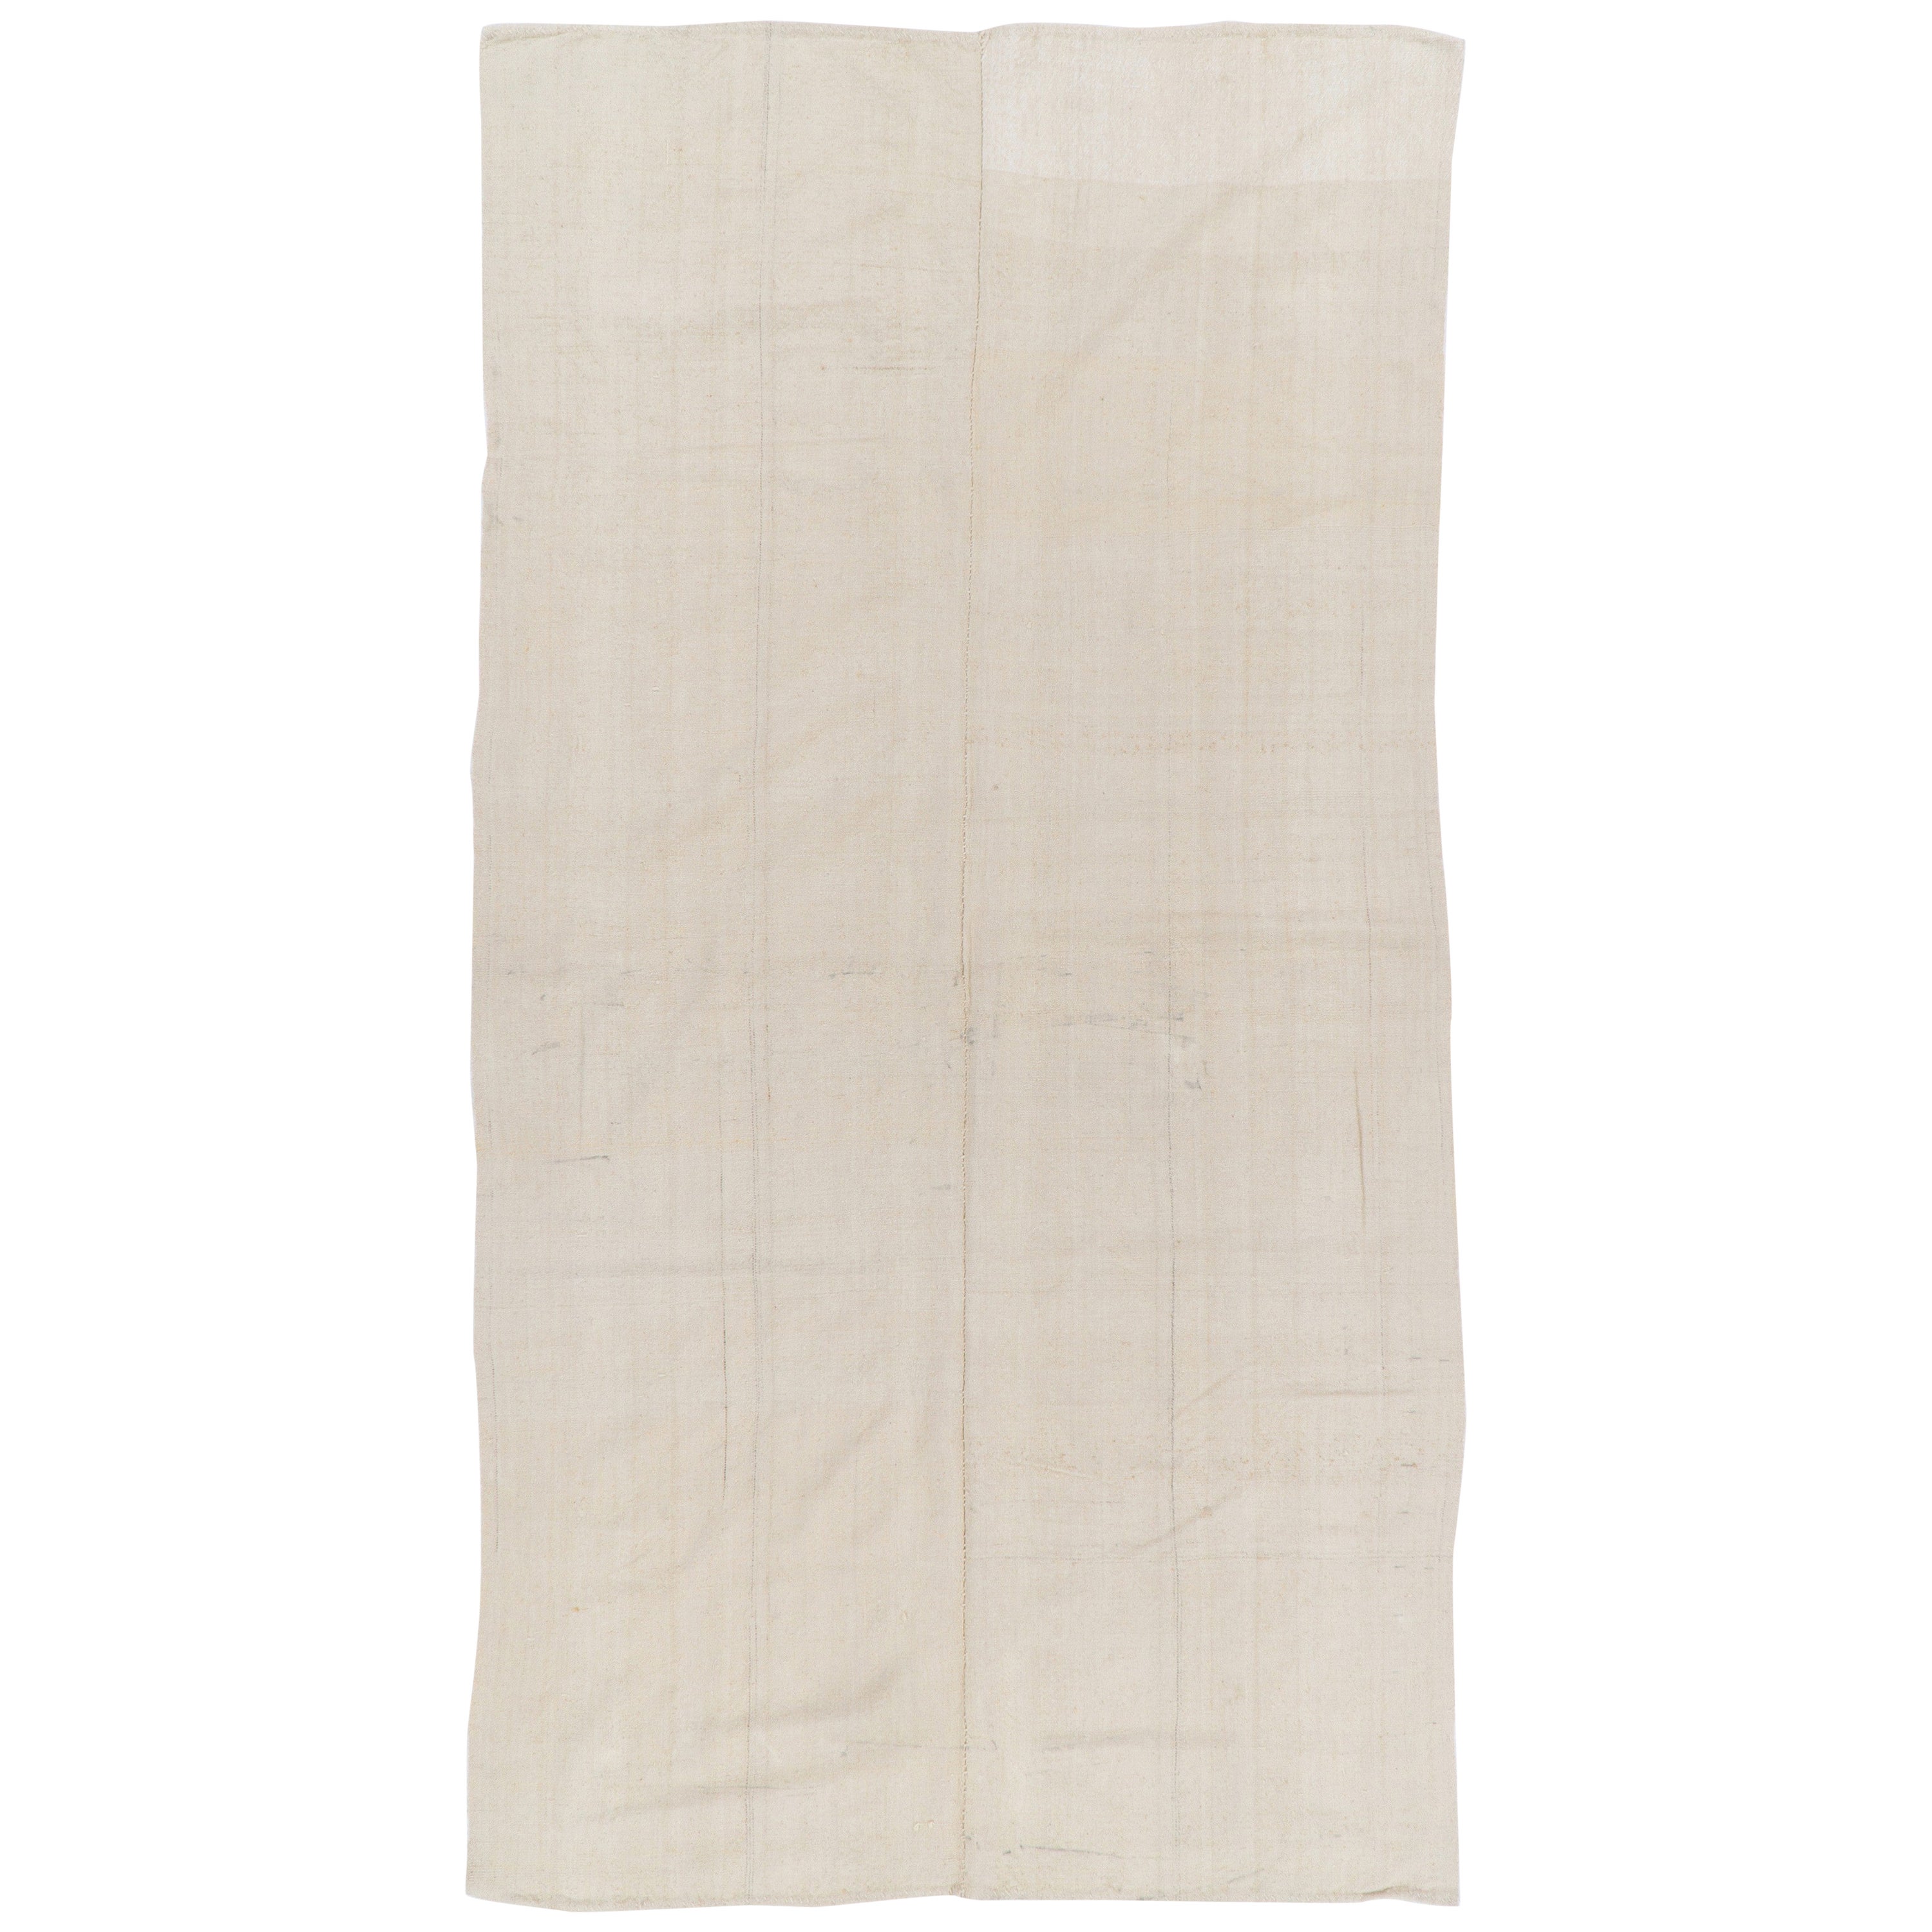 5.2x9.7 ft Hand-Woven Wool Vintage Plain Kilim / Flat-Weave Runner Rug in Cream